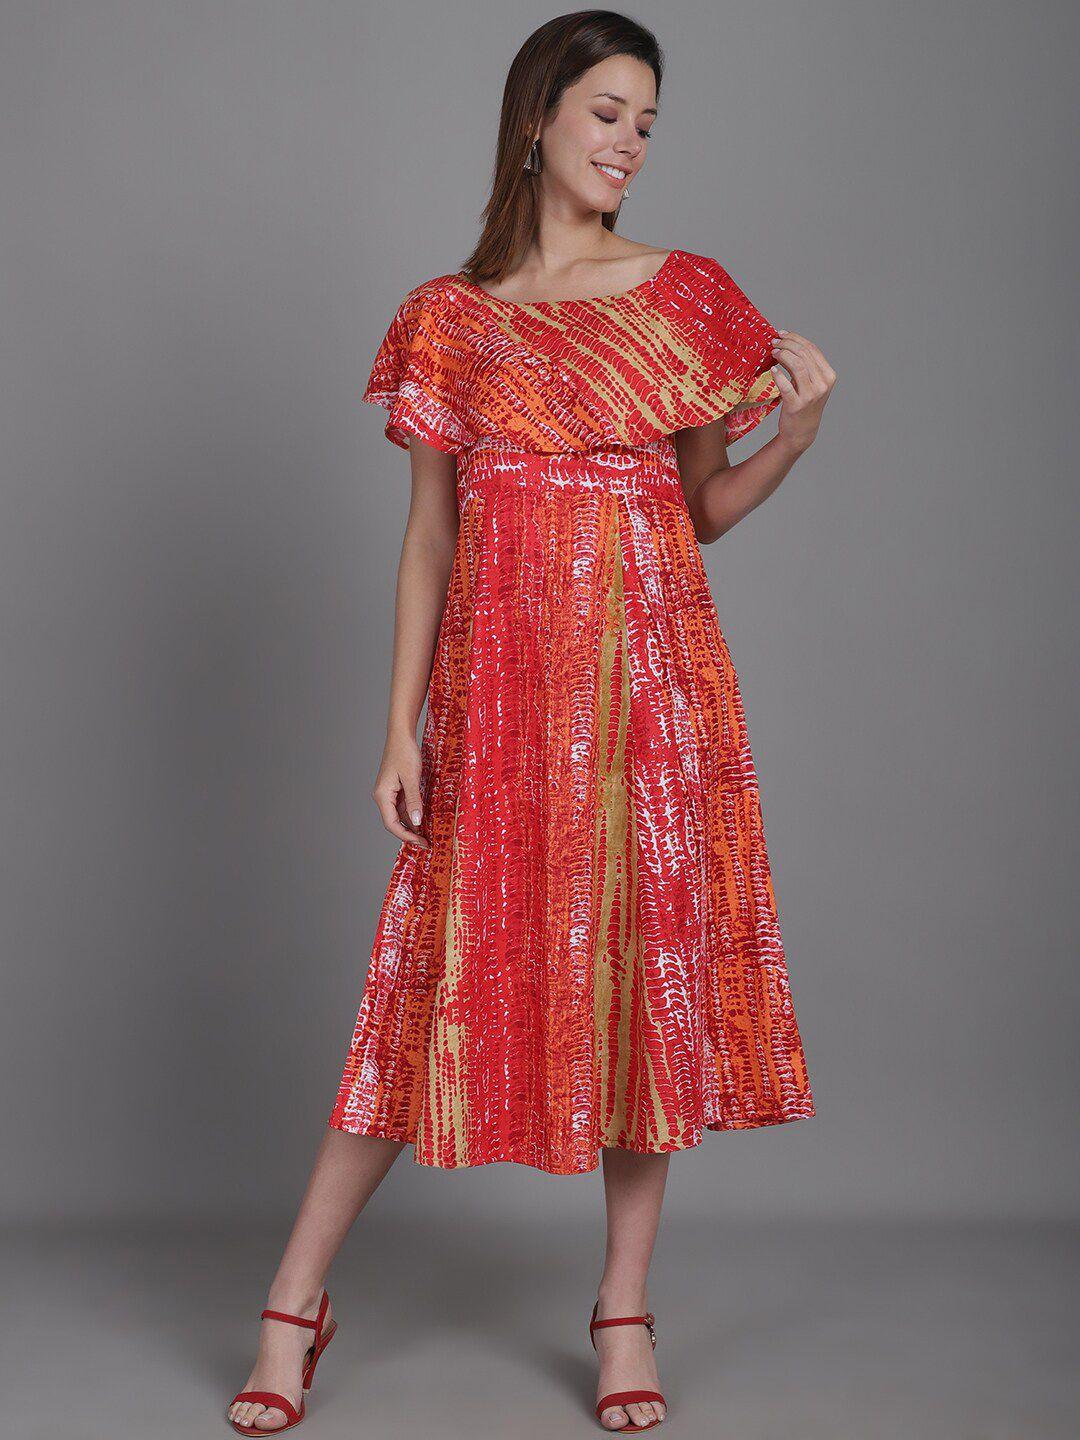 enchanted drapes cotton abstract print off-shoulder empire midi dress